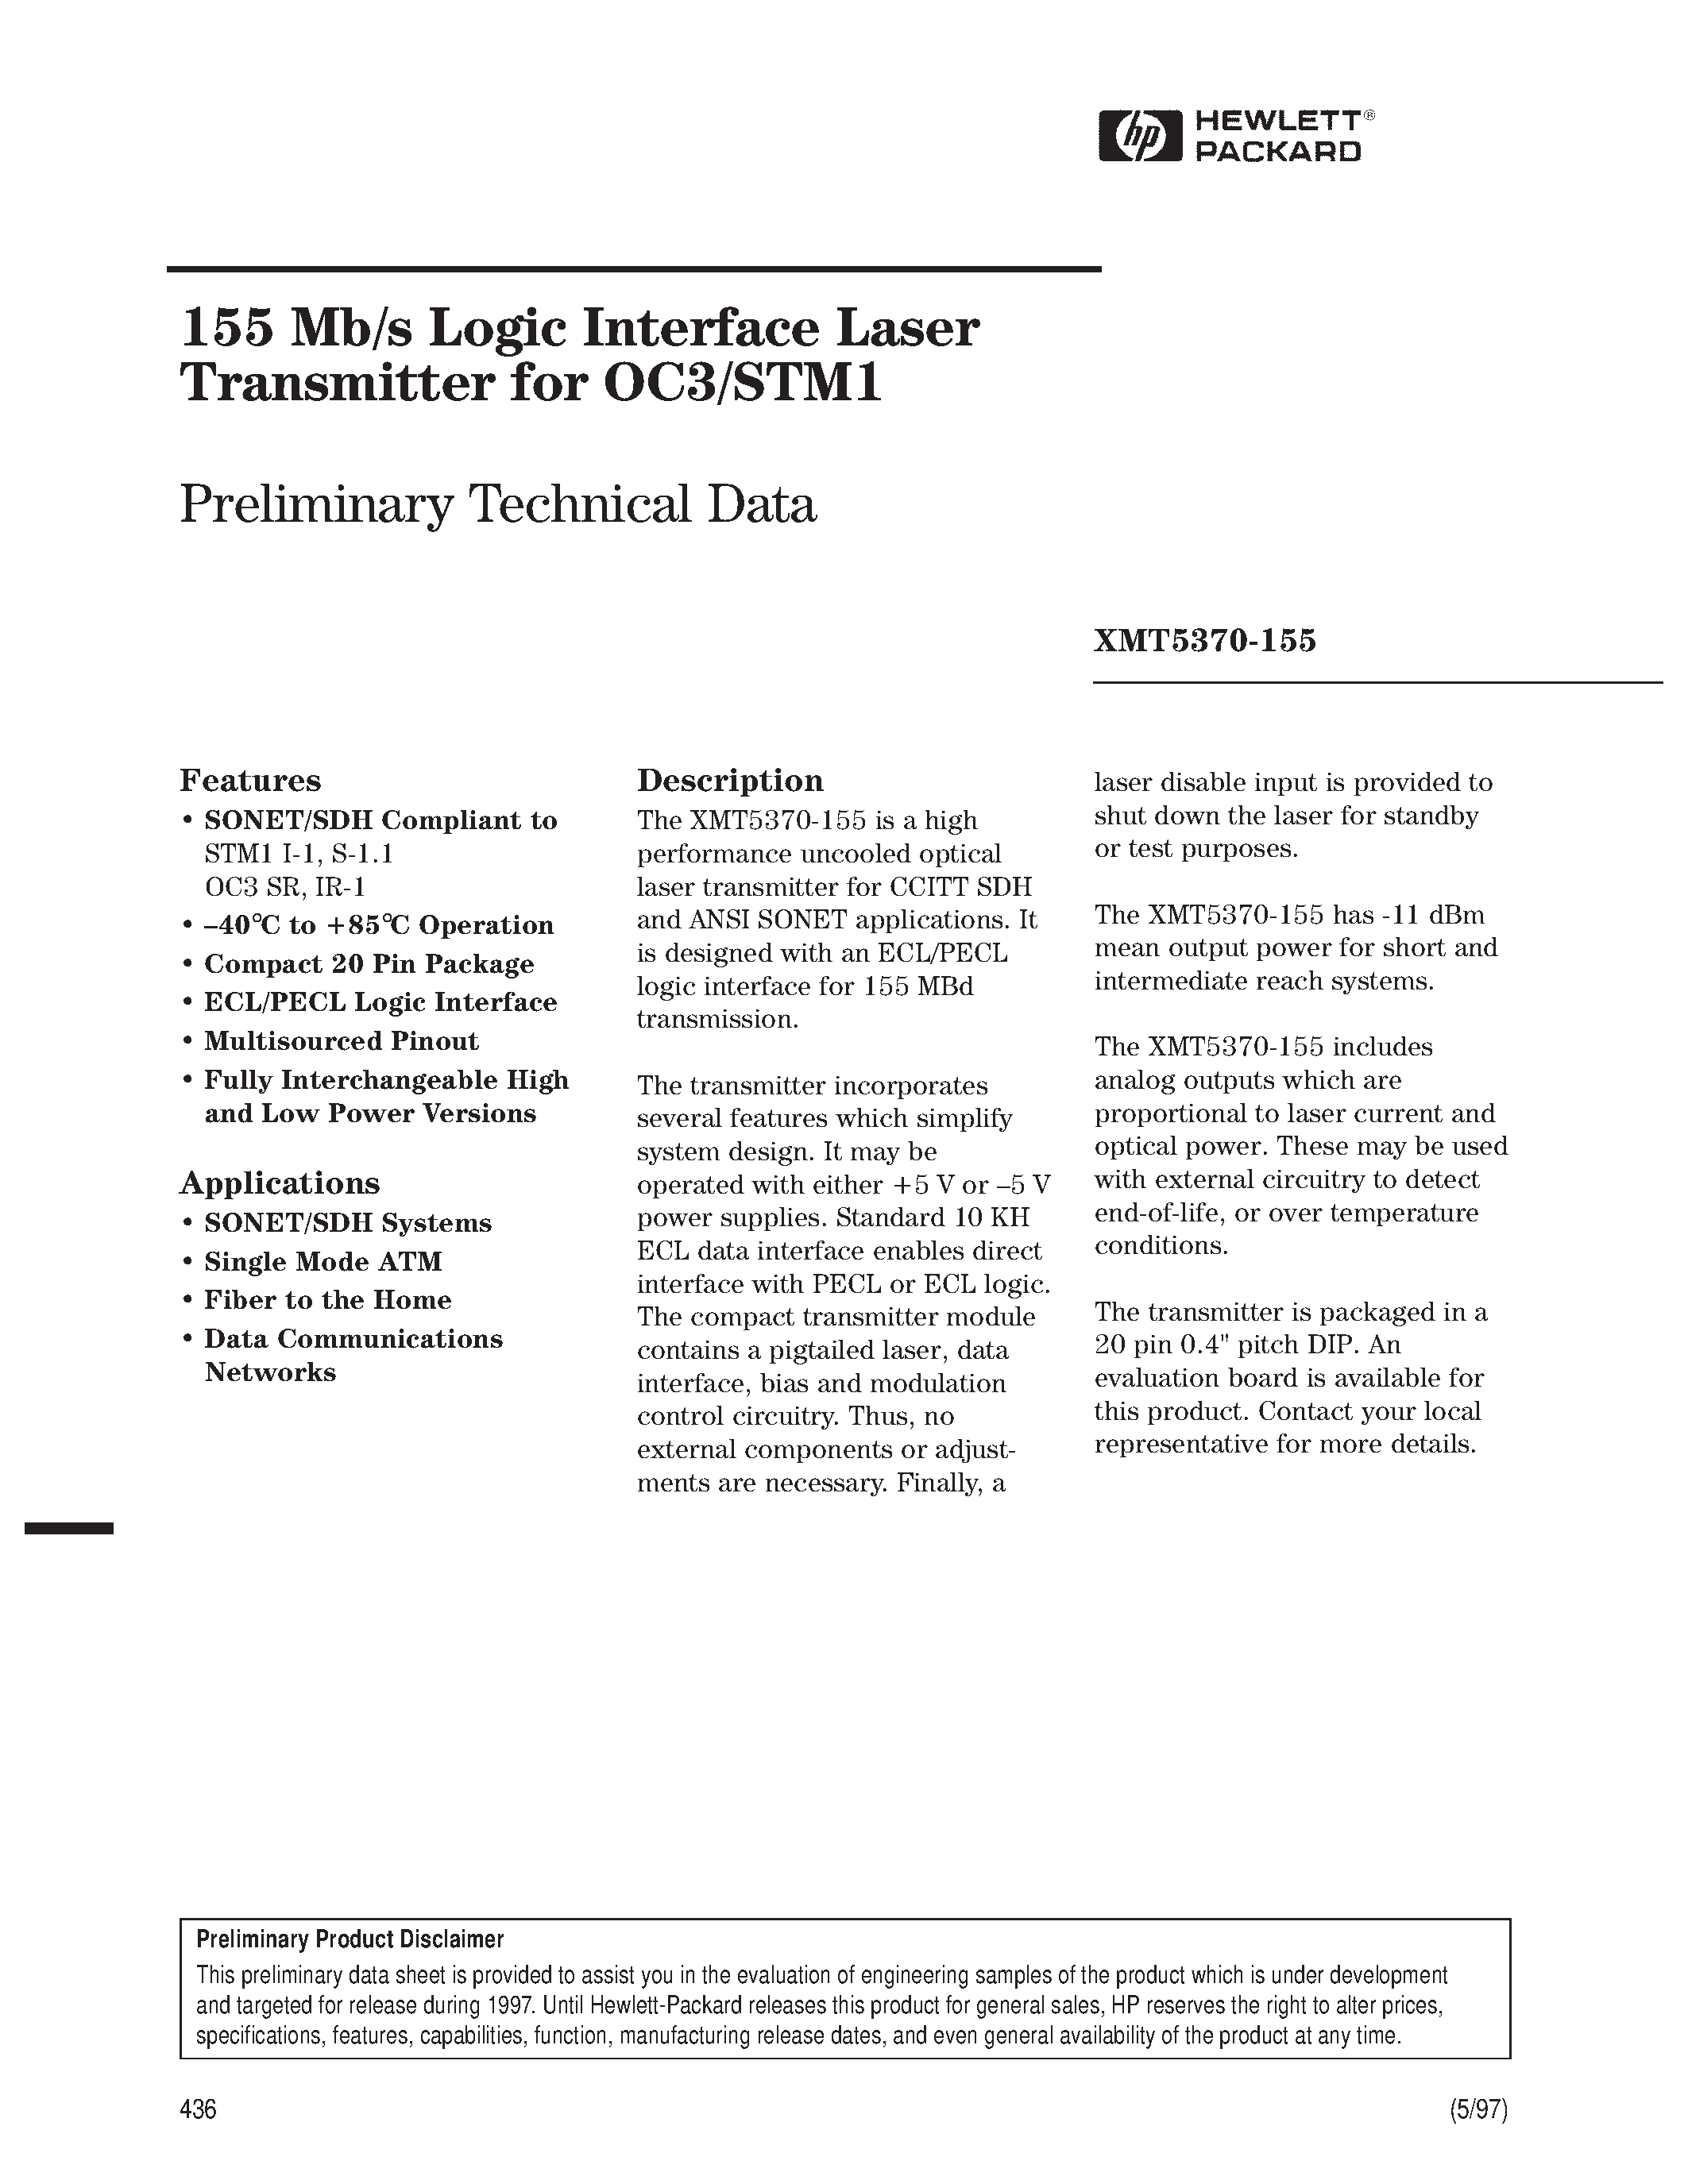 Datasheet XMT5370B-155-ST - 155 Mb/s Logic Interface Laser Transmitter for OC3/STM1 page 1